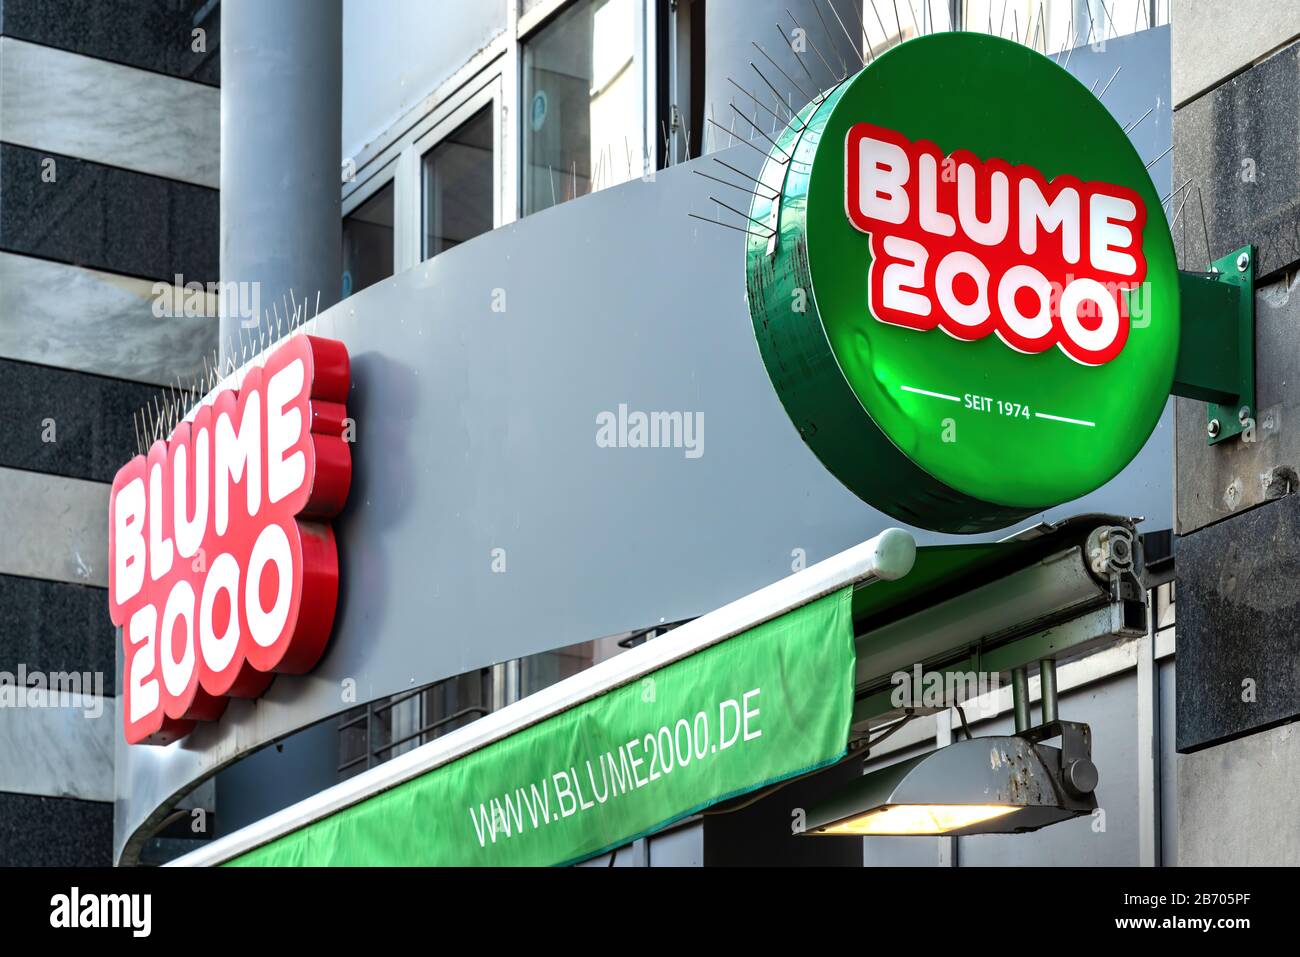 Frankfurt,Germany, 03/01/2020: Logo of Blume 2000. Blume 2000 Blumen-Handelsgesellschaft mbH is a German company based in Norderstedt that trades in f Stock Photo